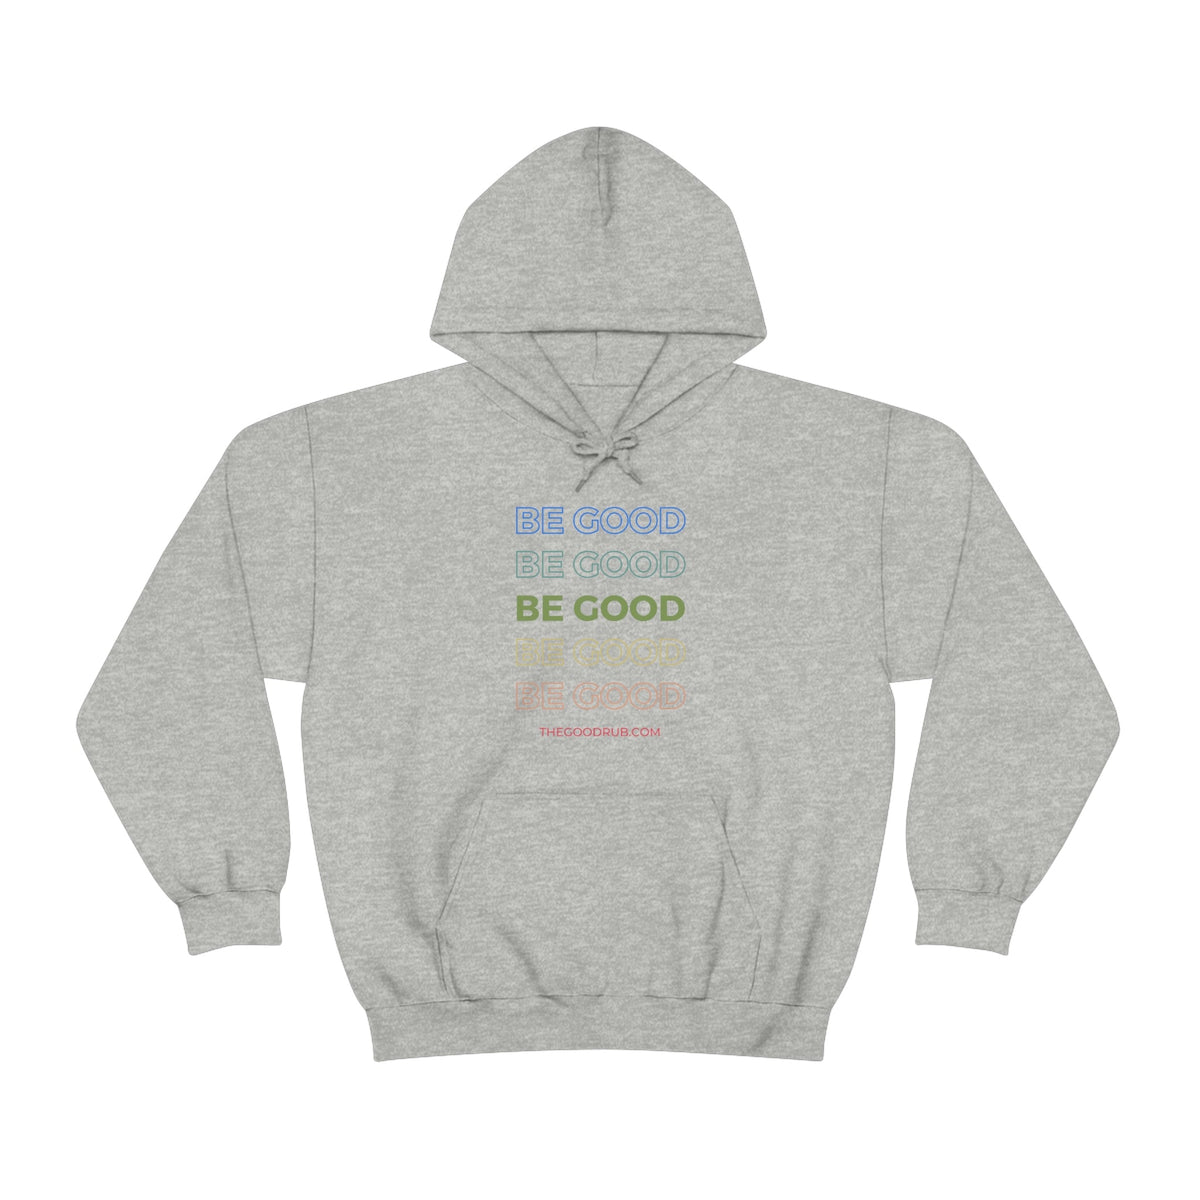 Unisex Heavy Blend Hooded | Unisex Hooded Sweatshirt | The Good Rub